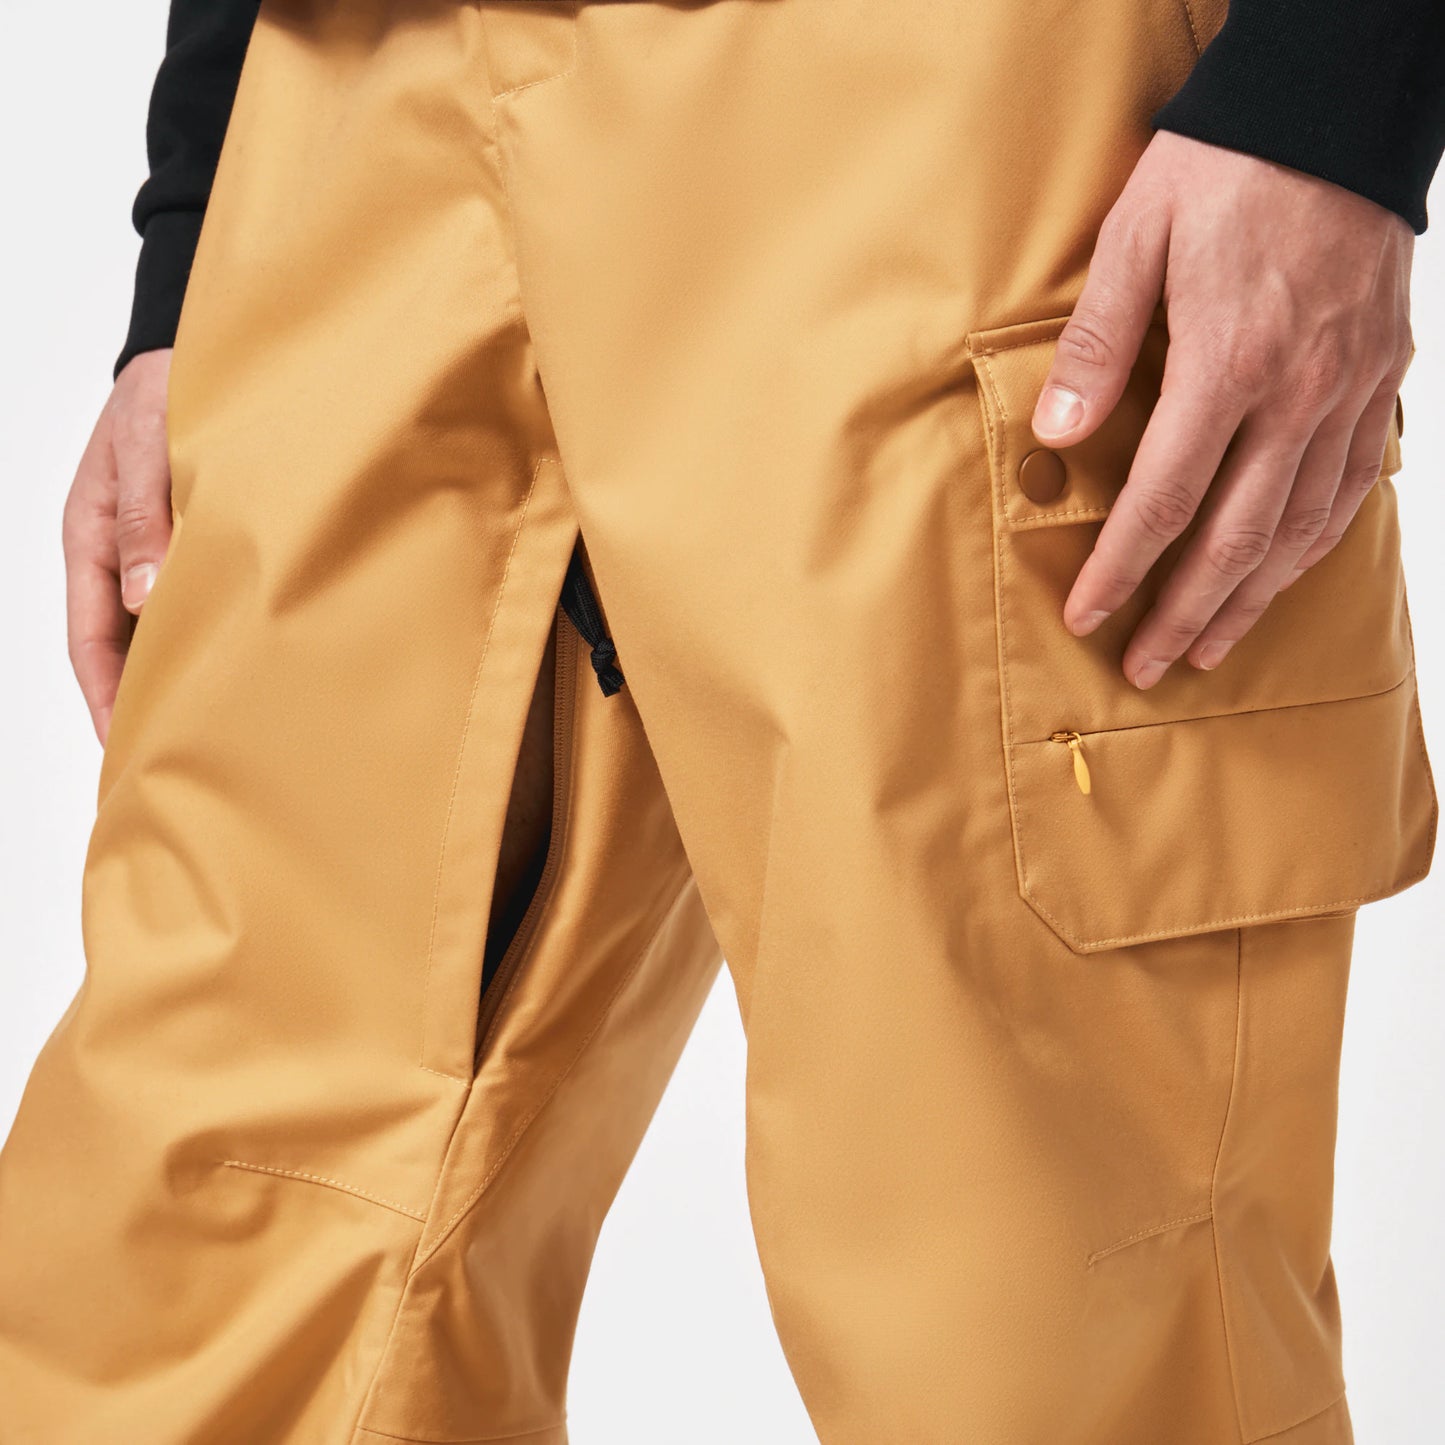 Oakley Pivot Cargo Shell Pants - Men's